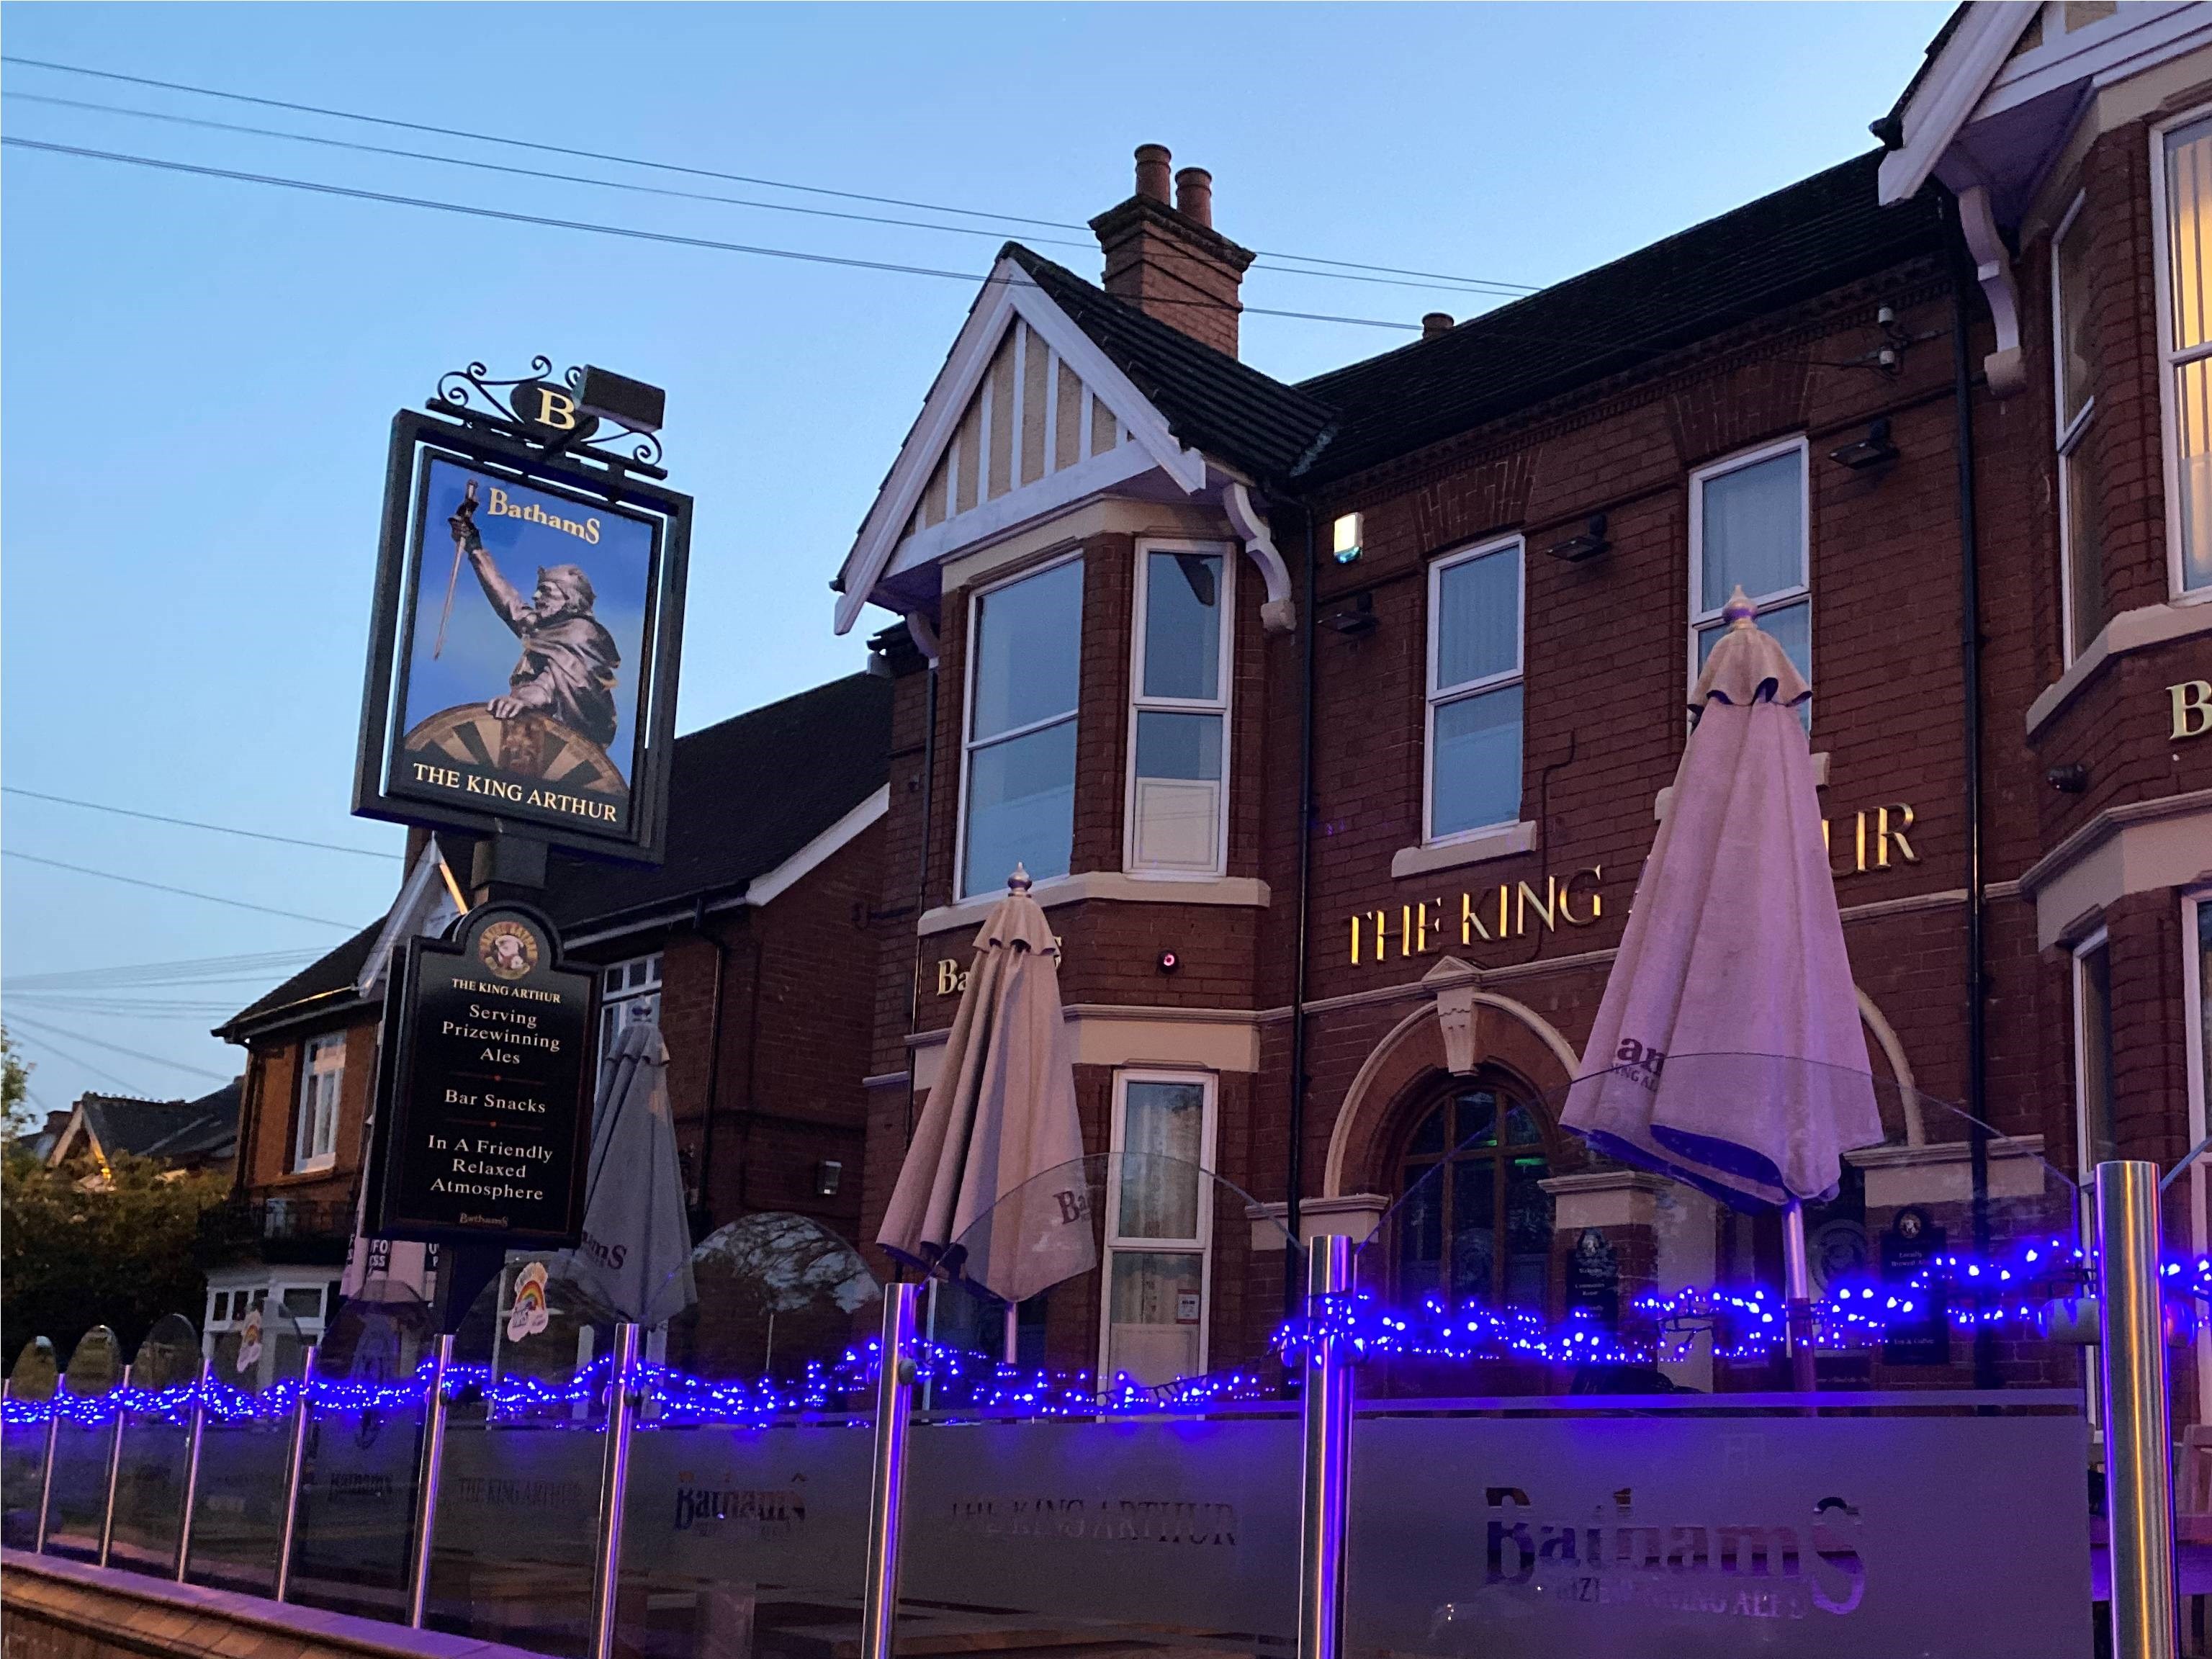 hagley pub light up with blue lights 